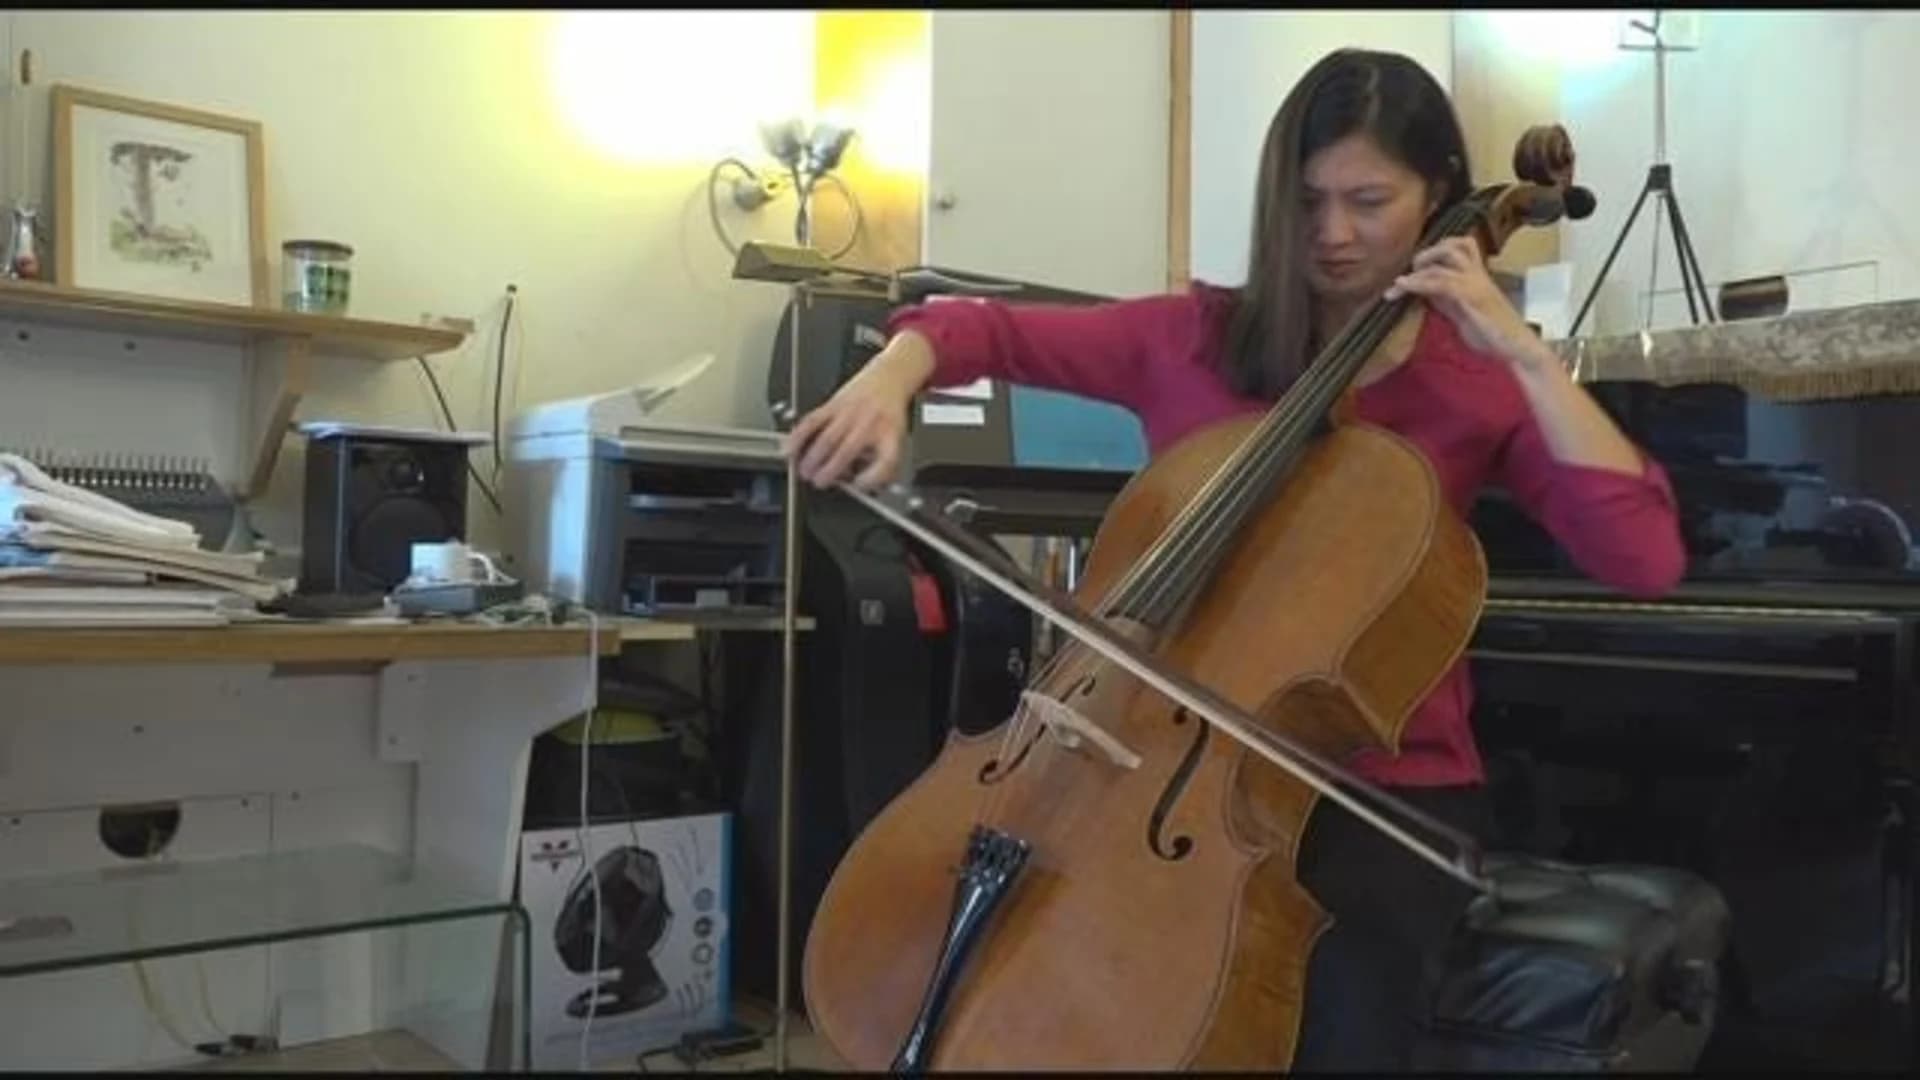 'It's really vibrant': Award-winning cellist calls the Bronx home